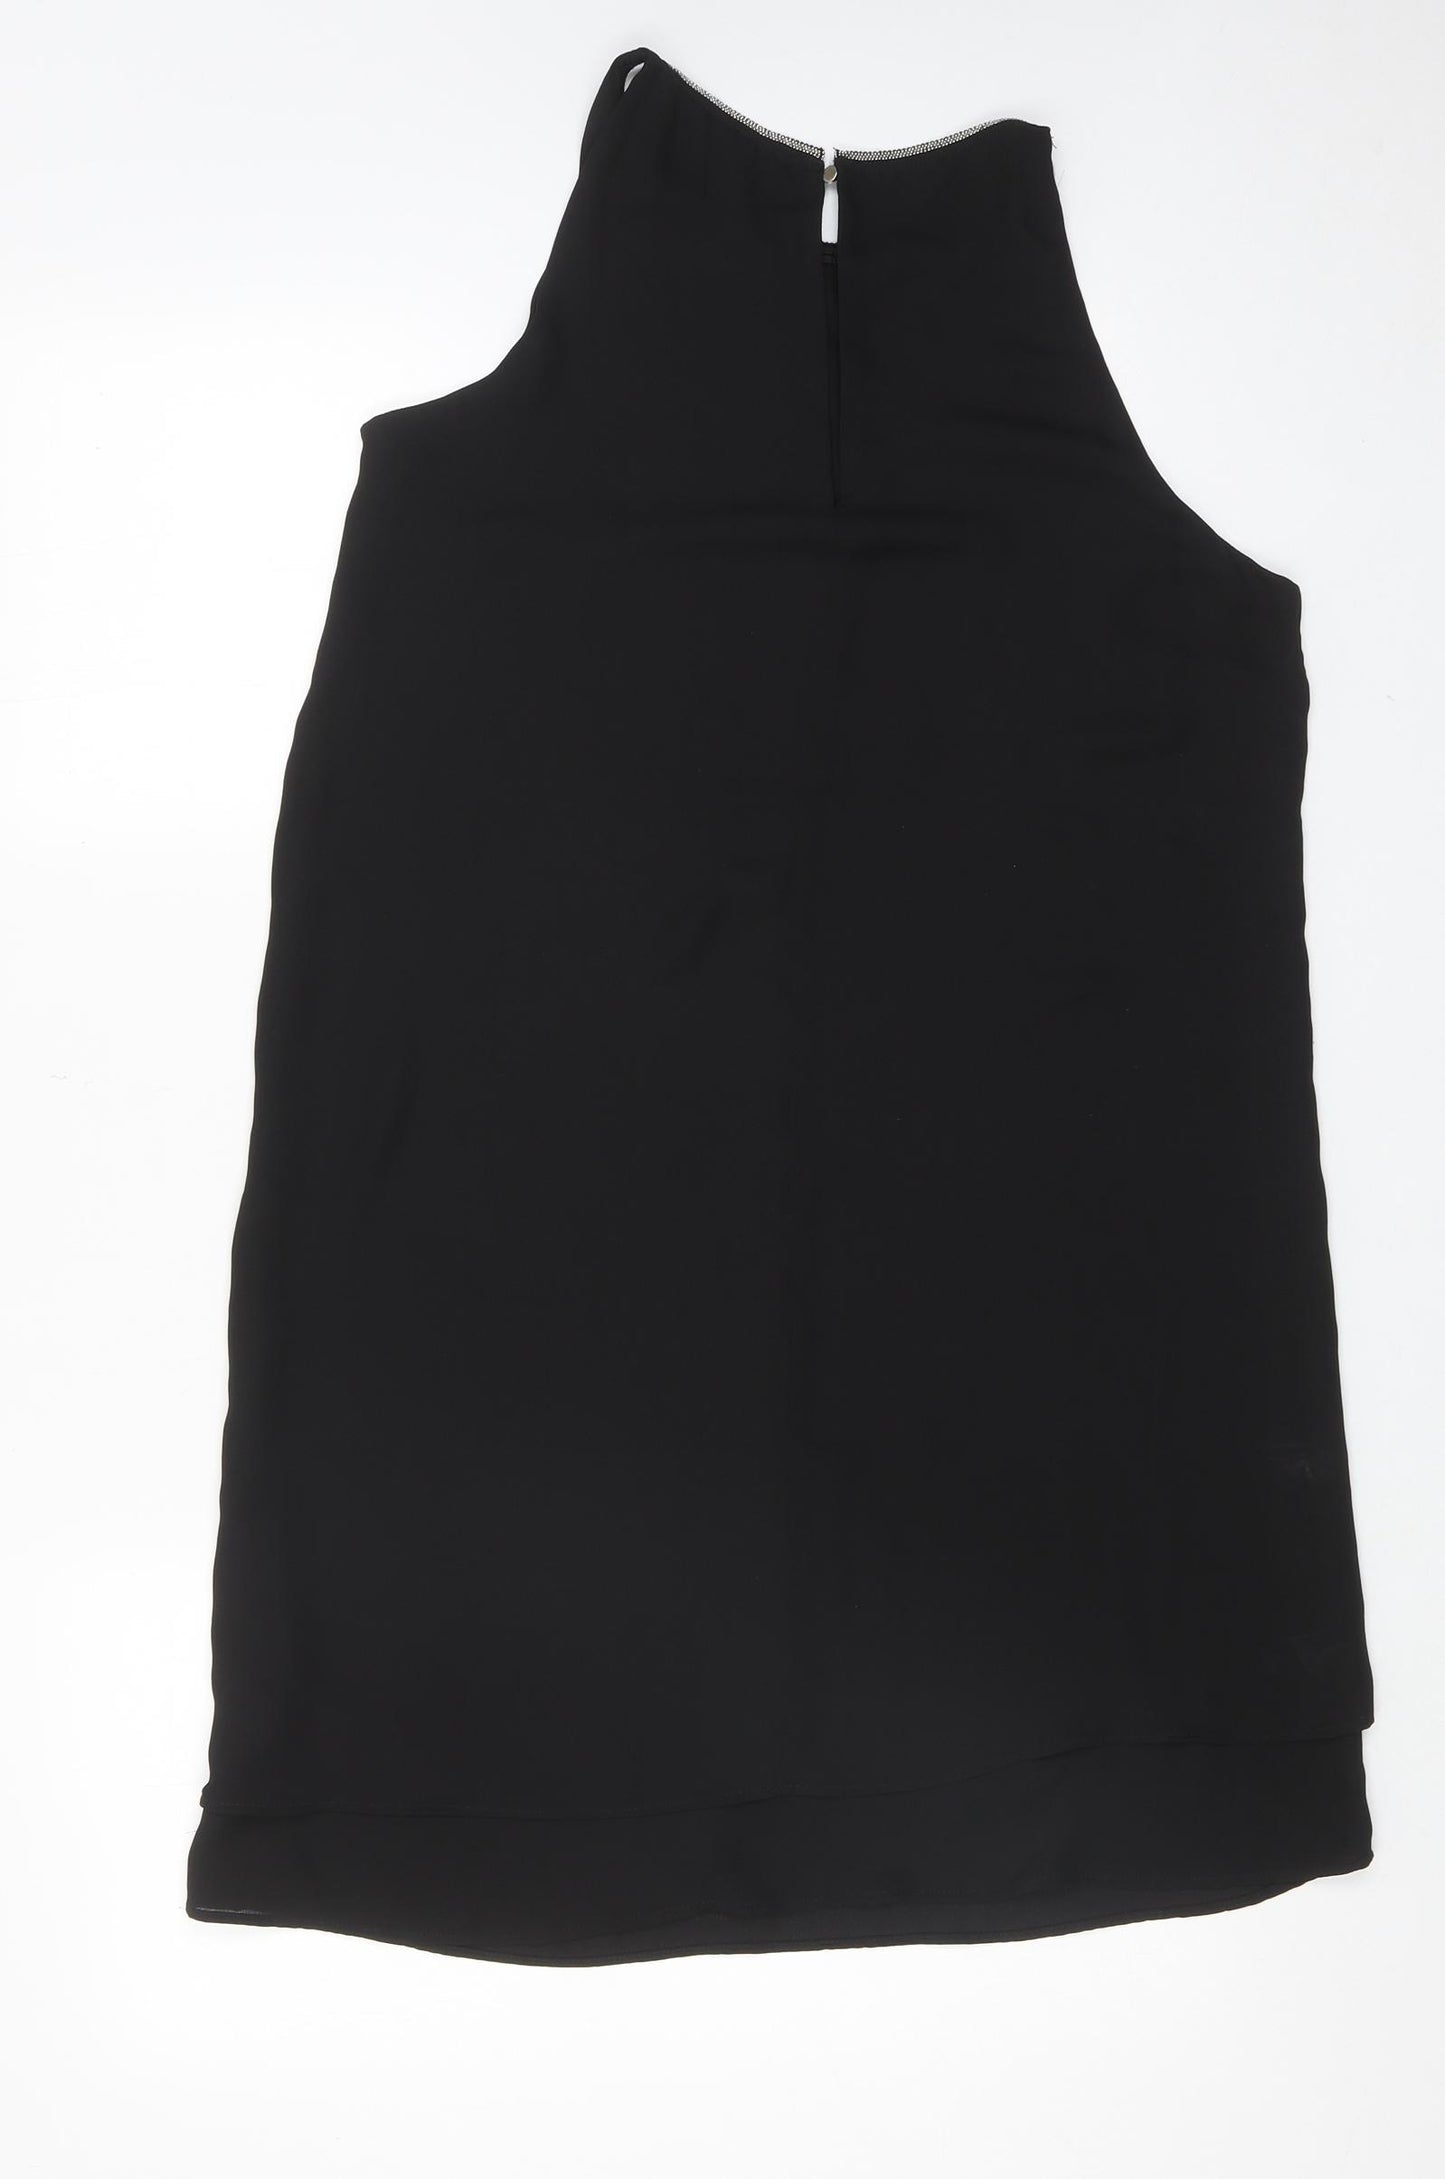 H&M Womens Black Polyester Tank Dress Size 10 Round Neck Button